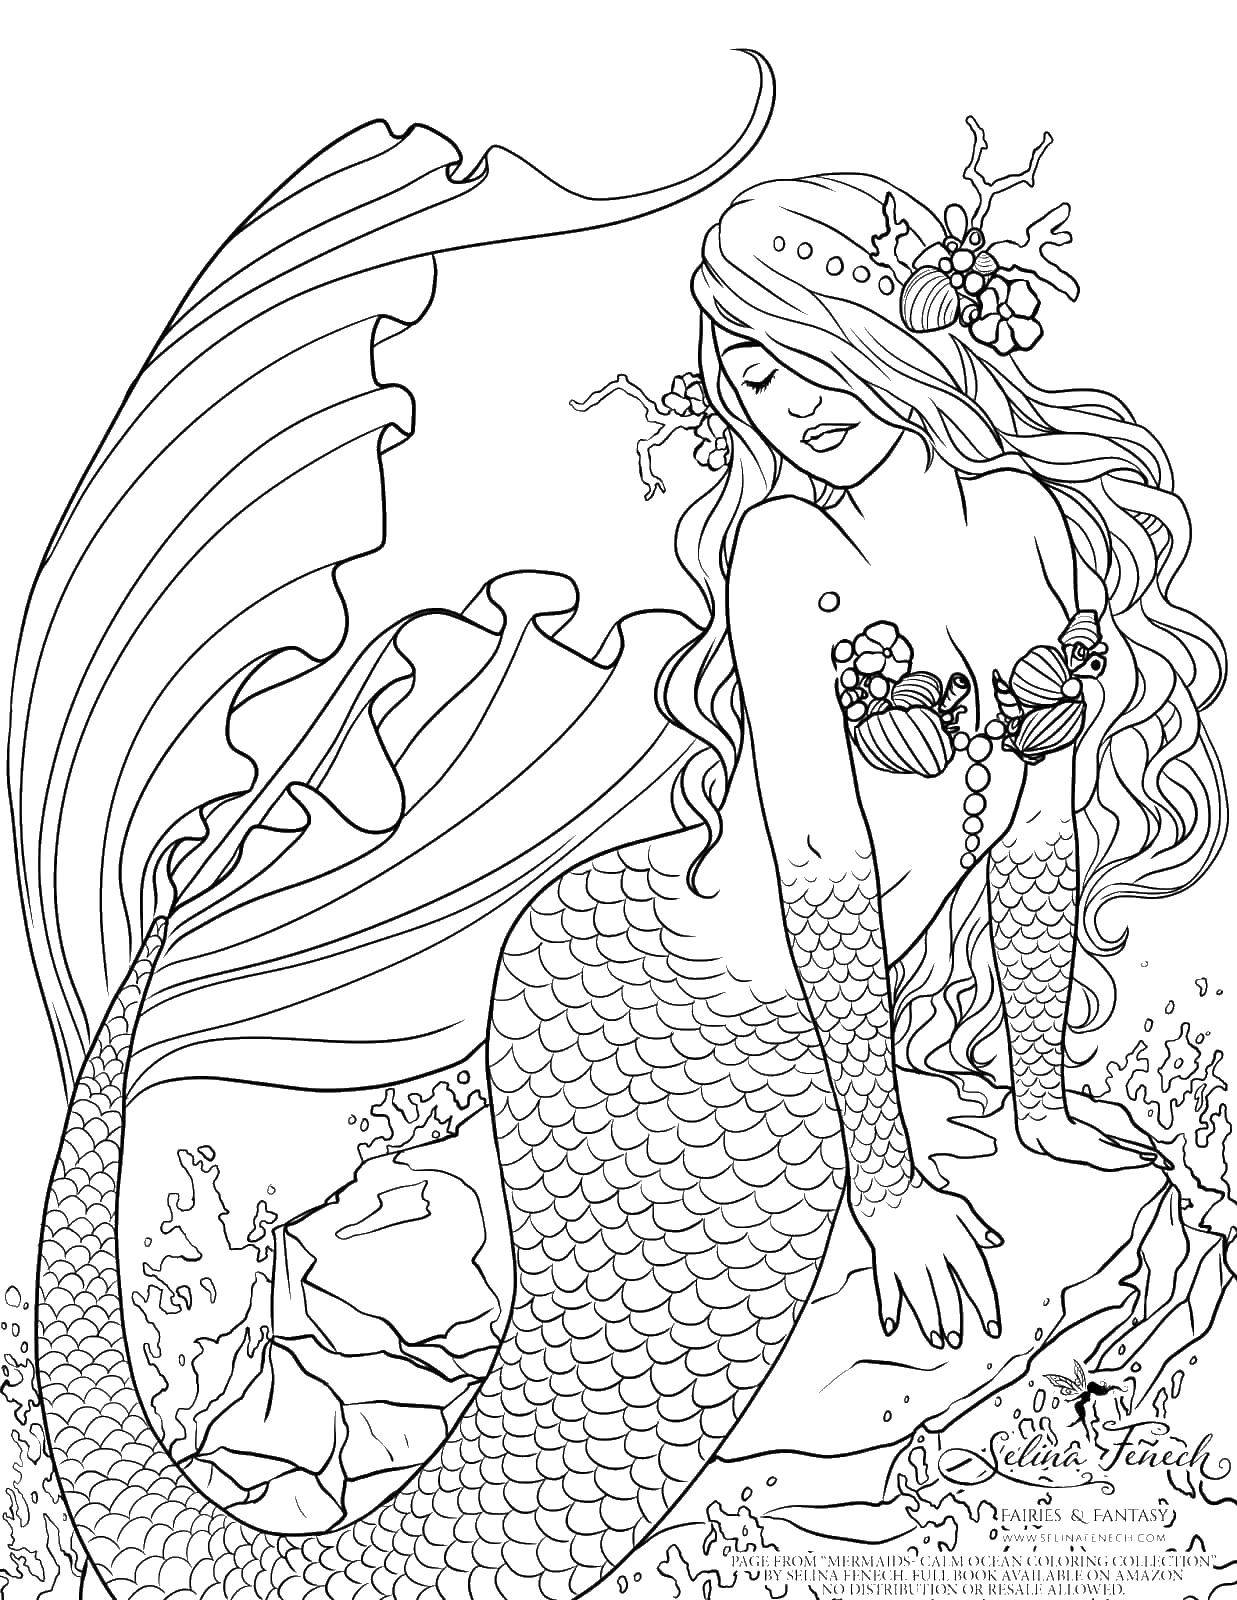 Coloring Beautiful mermaid. Category Fantasy. Tags:  fantasy, mermaid, girl.